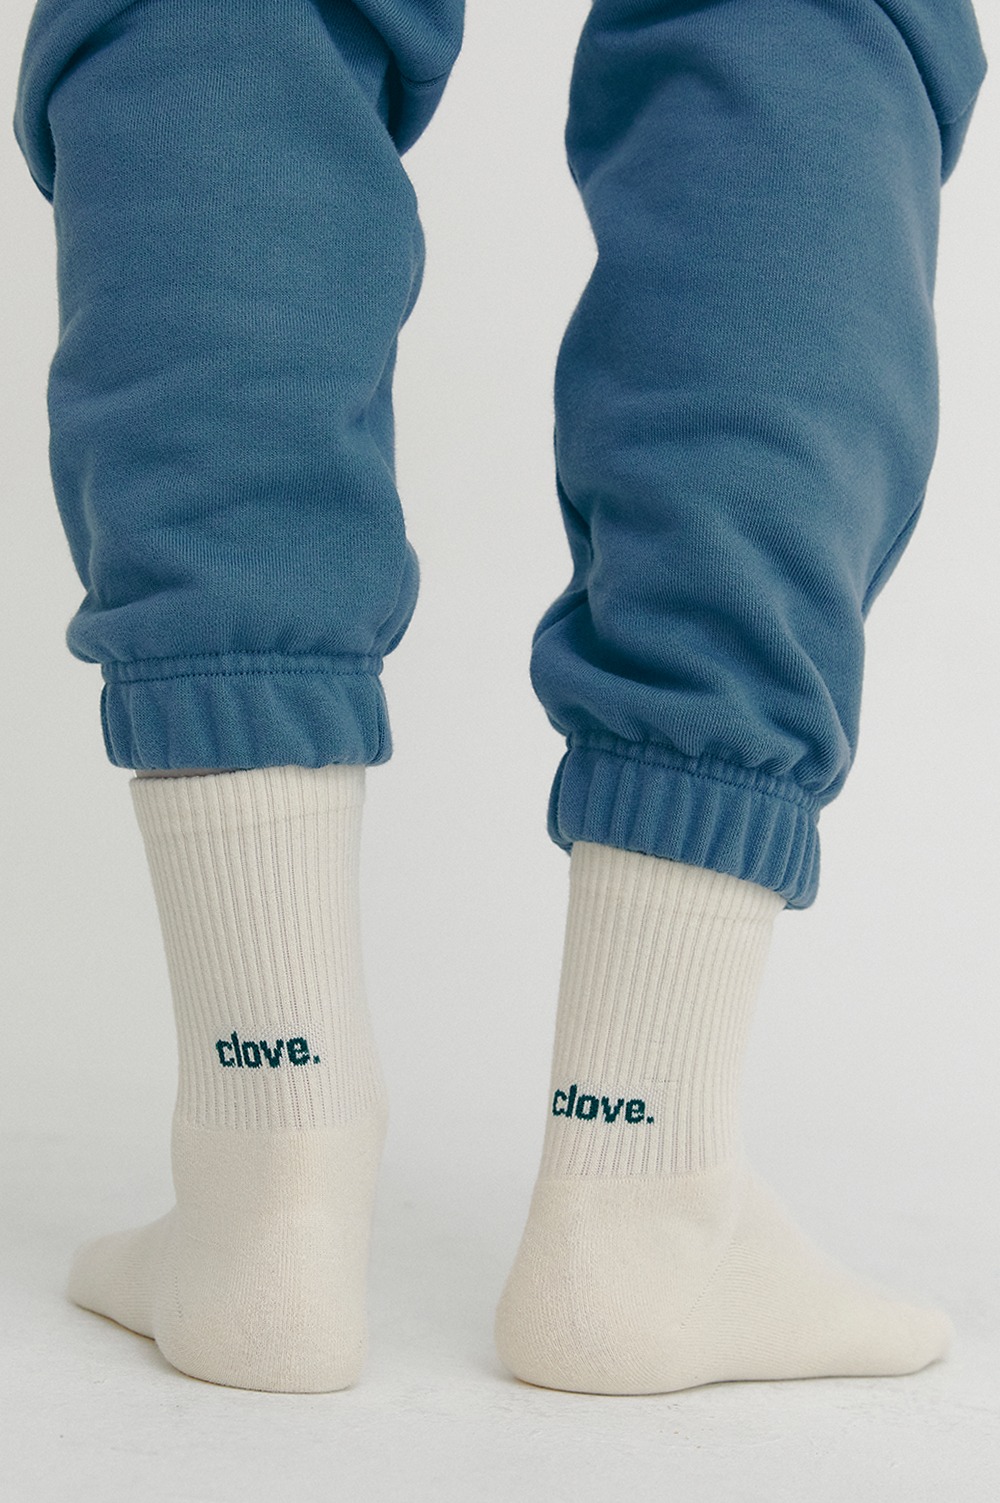 clove - [FW20 clove] Clove Logo Socks (Ivory)